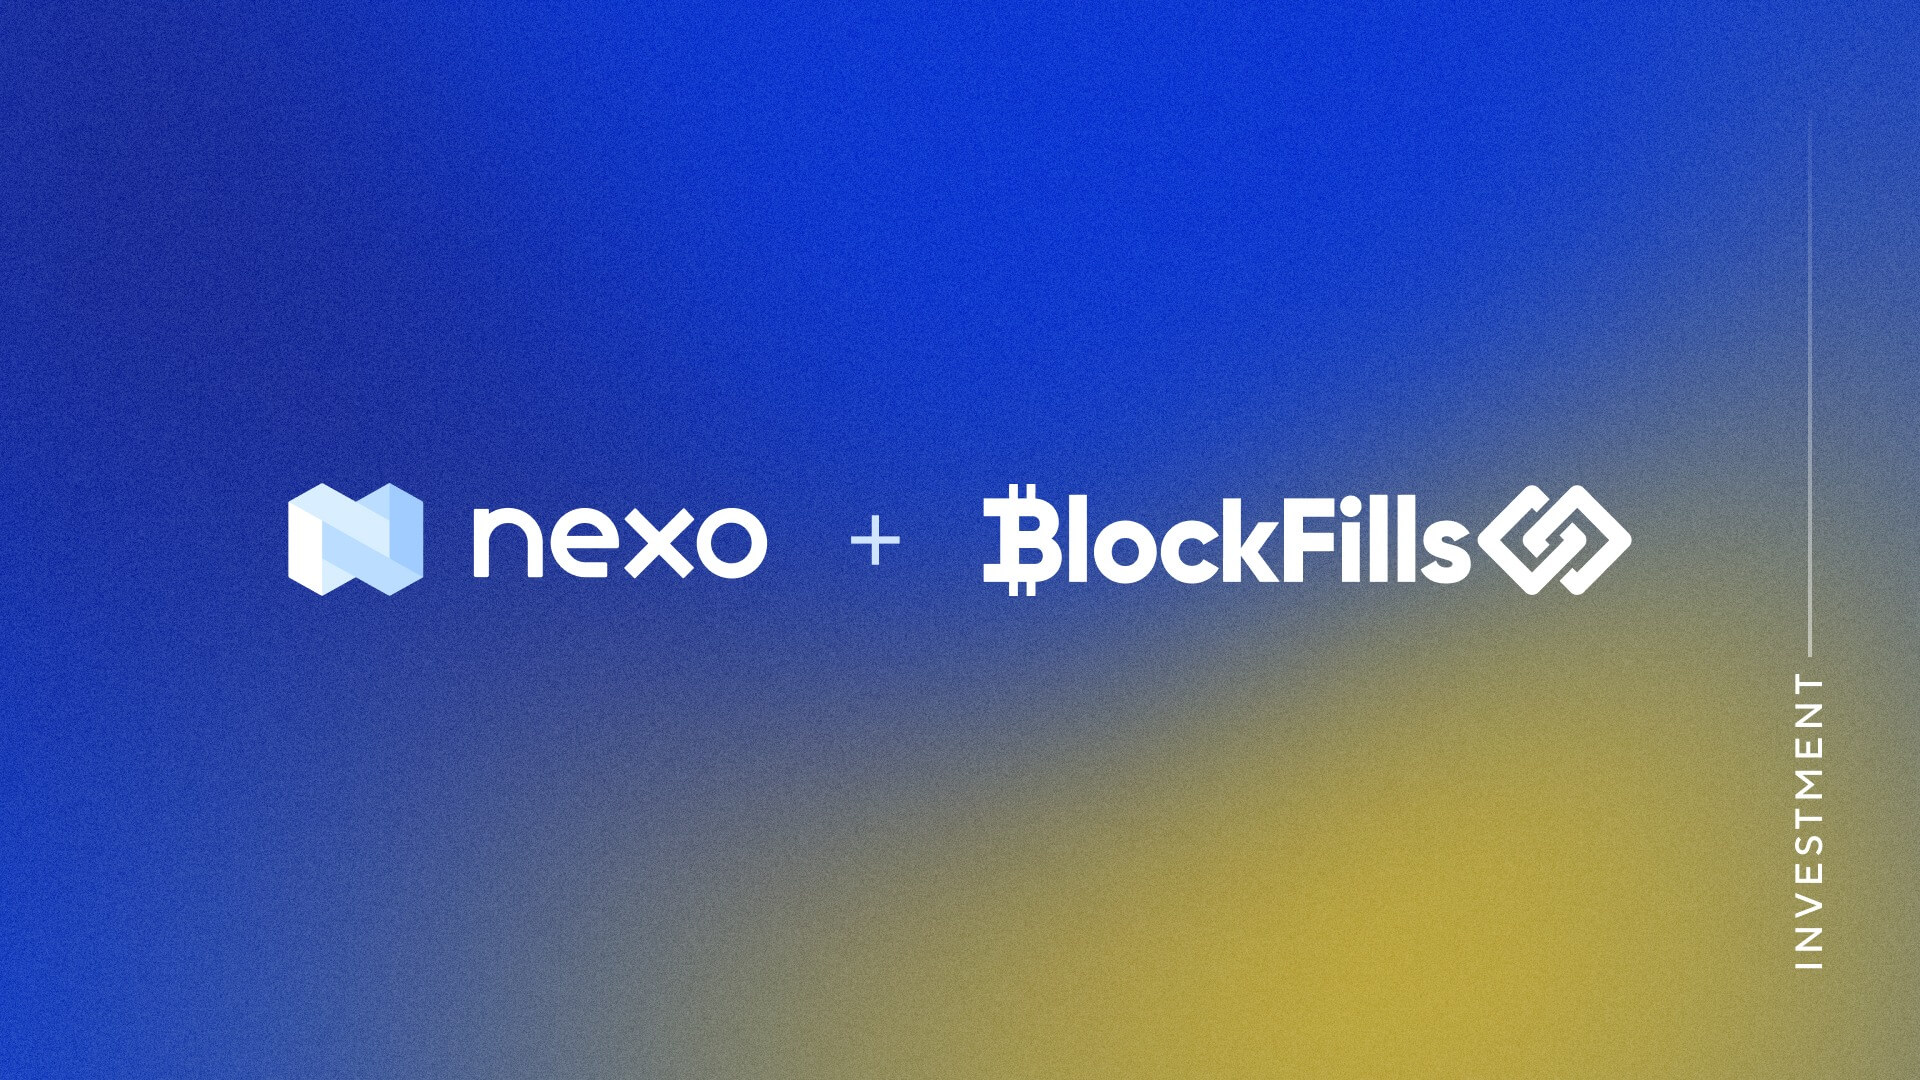 Nexo Expands Prime Brokerage Capabilities & Services for Crypto Miners to BlockFills via Strategic Partnership